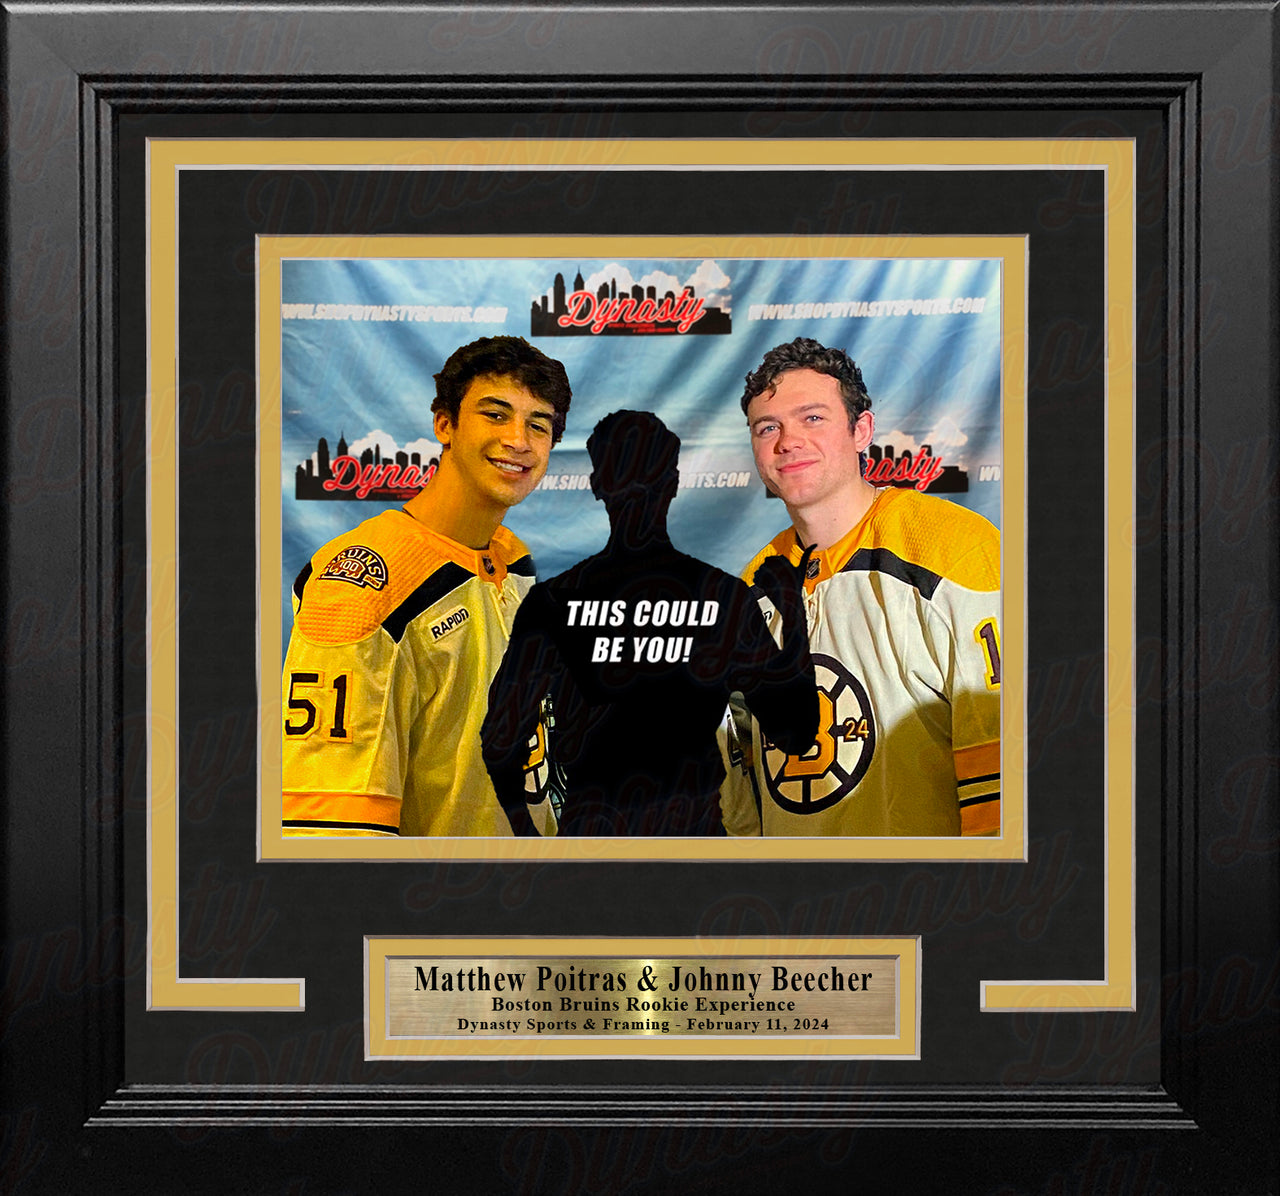 Matthew Poitras & Johnny Beecher Boston Bruins Photo-Op Frame Kit